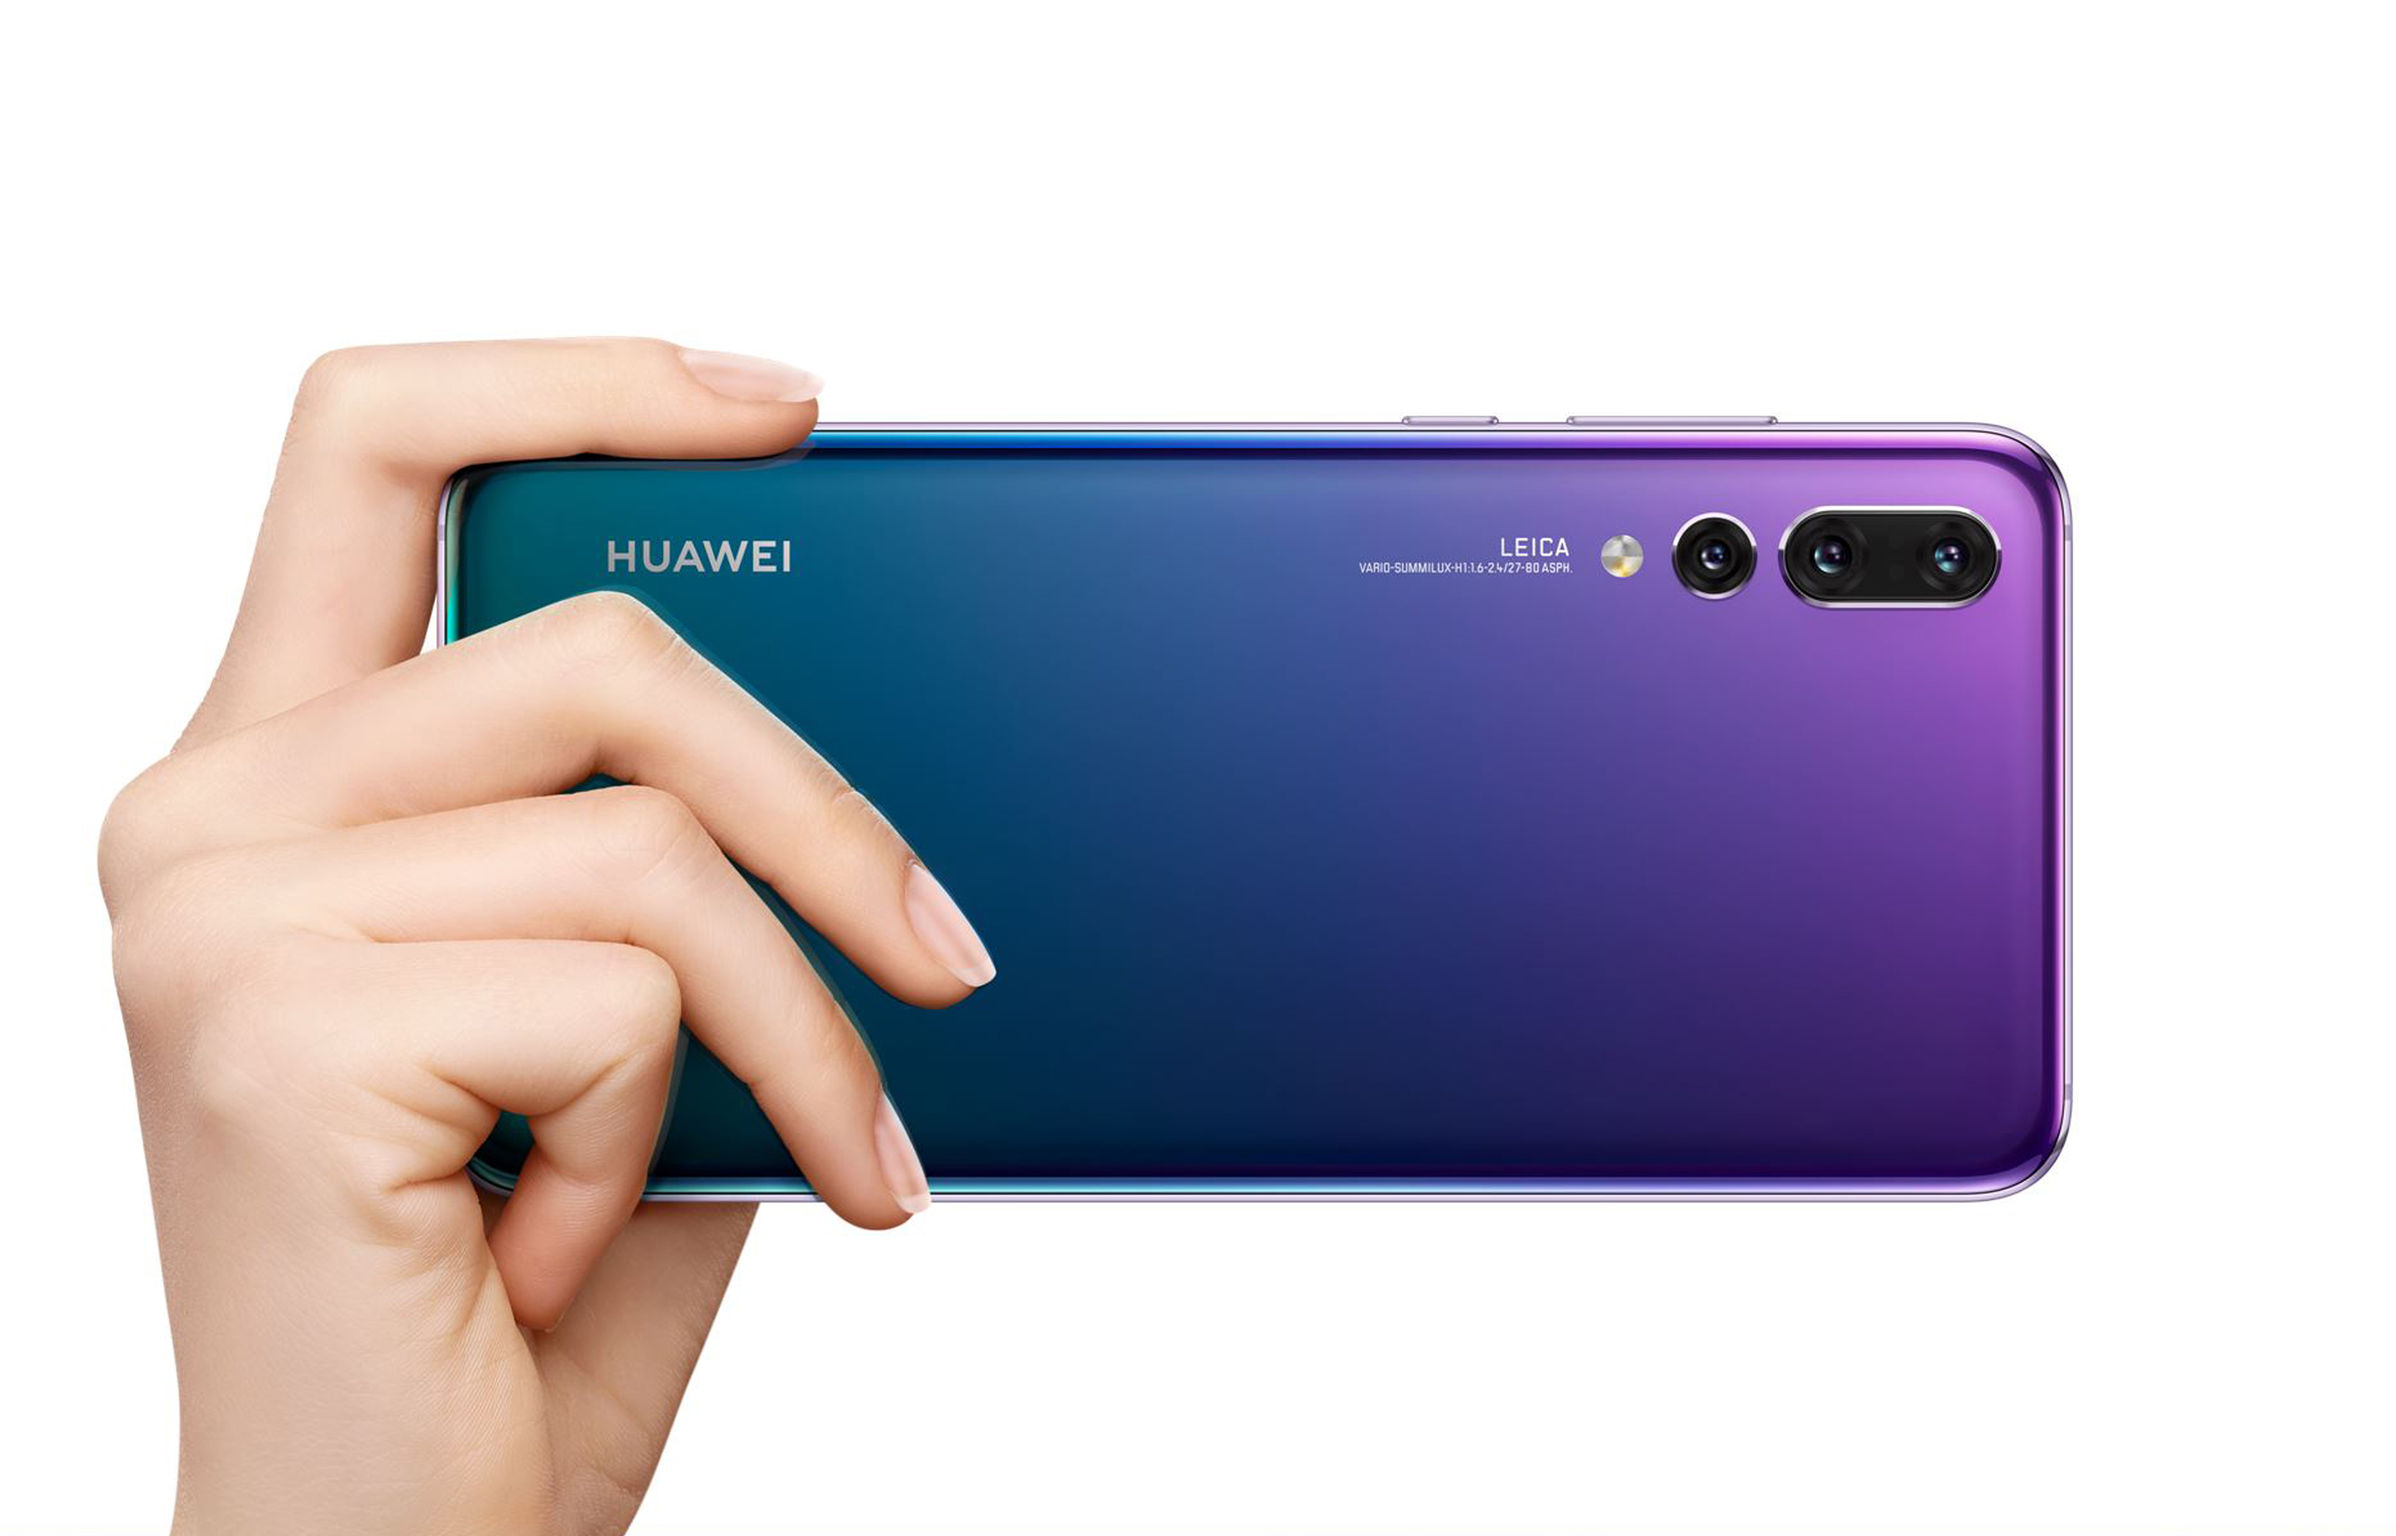 Huawei P20 pro